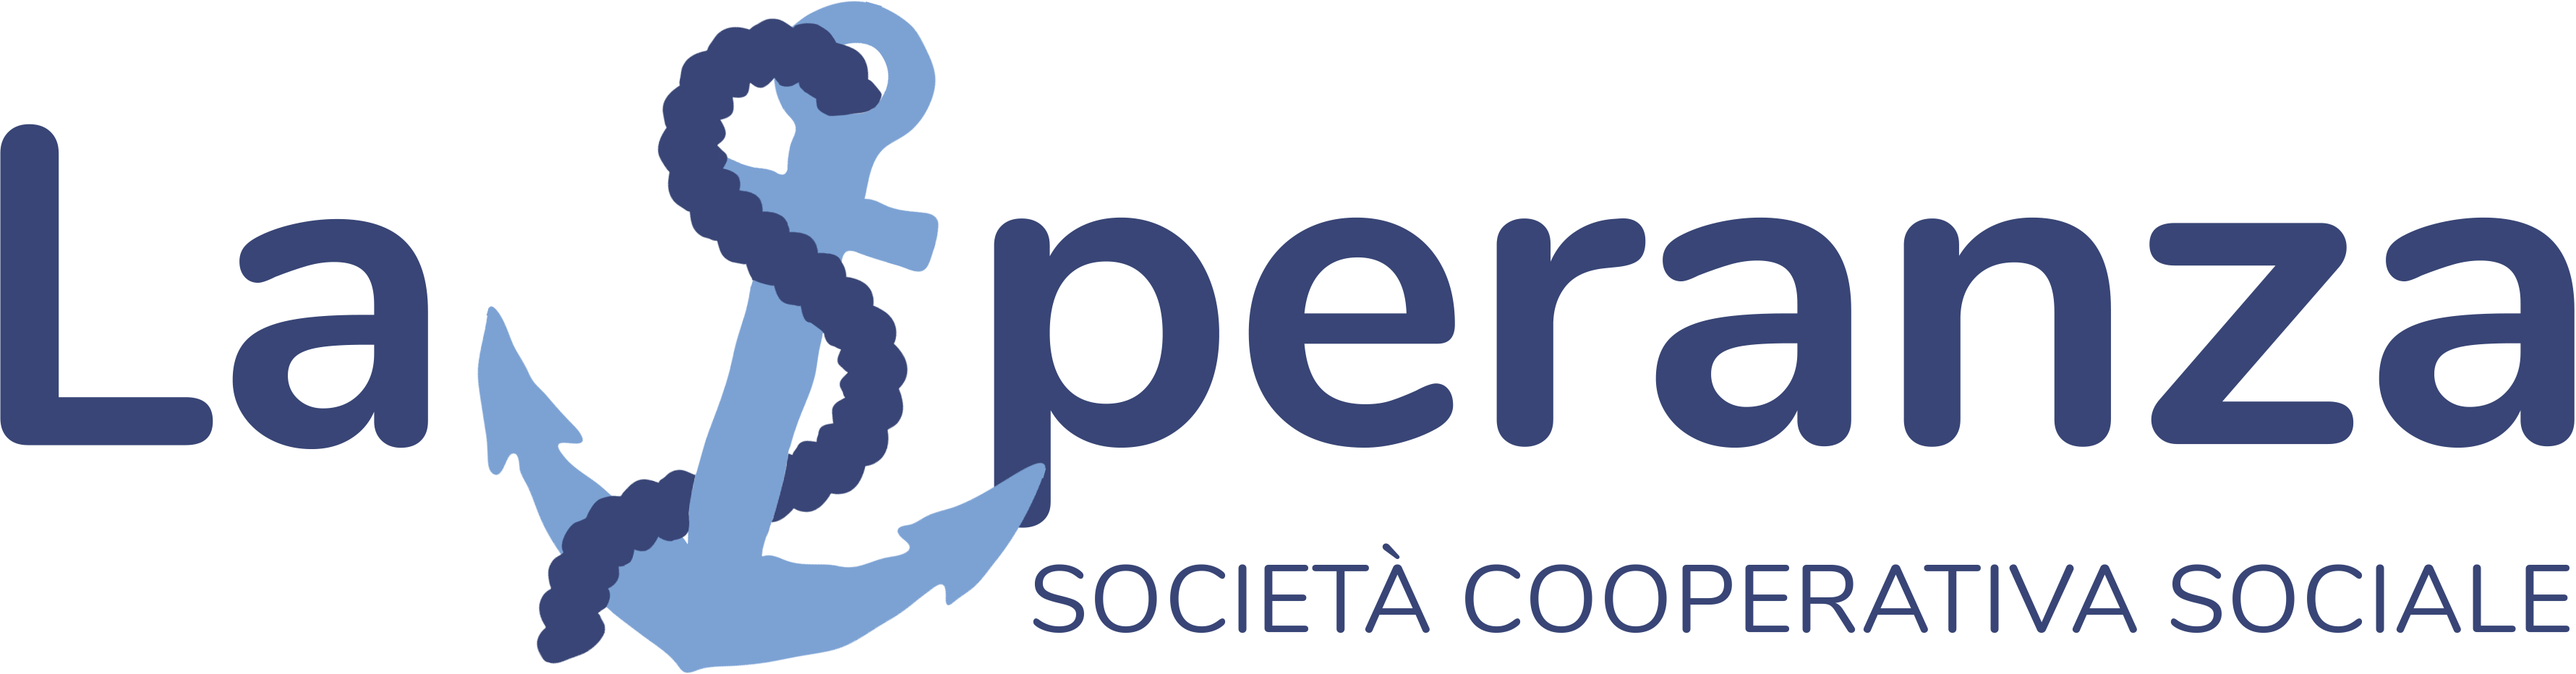 logo_la_speranza-1